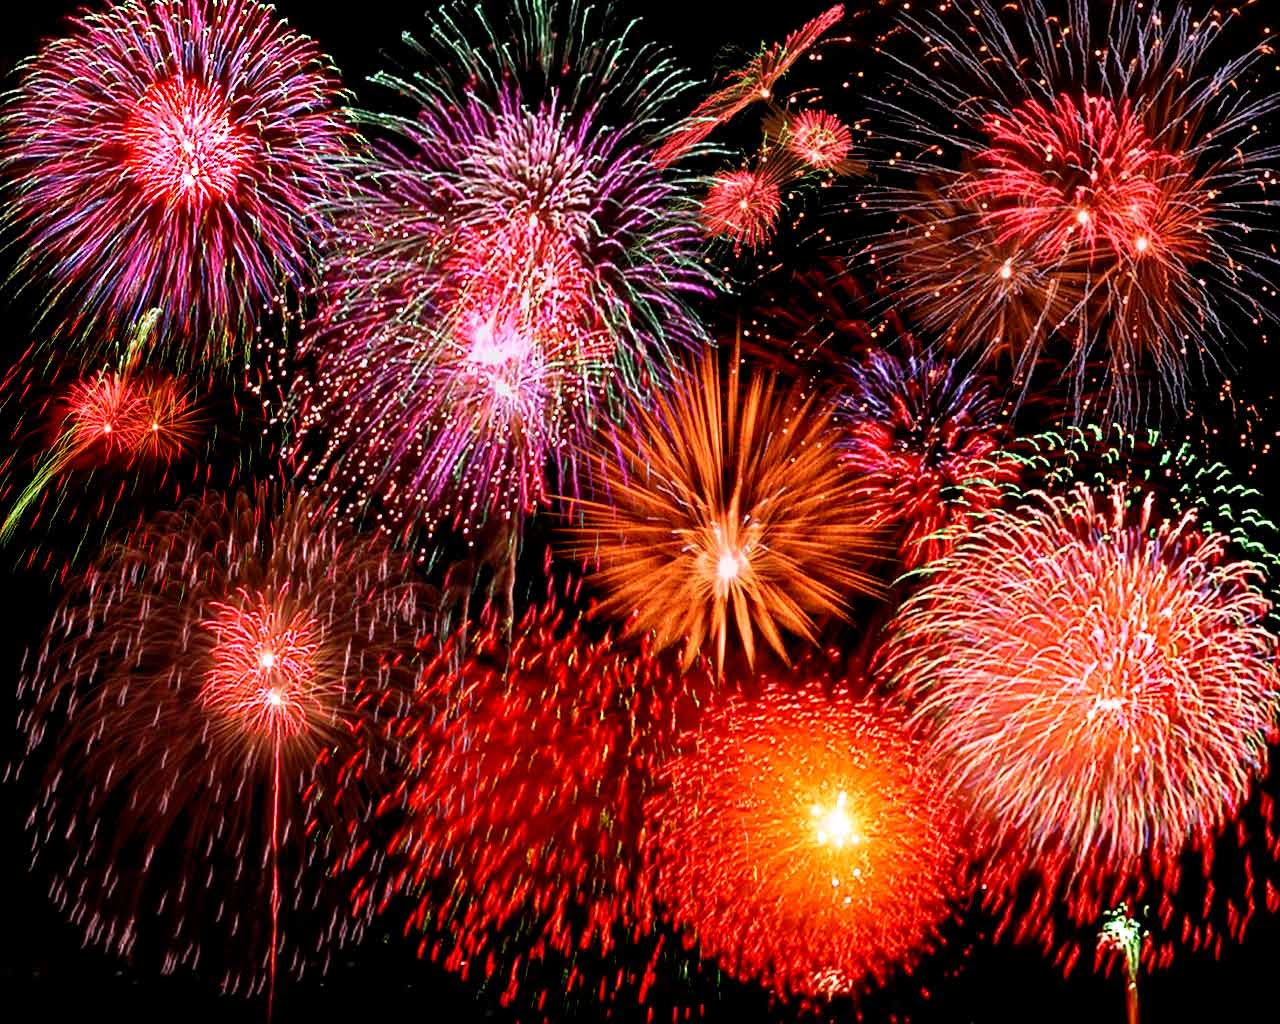 http://ziptivity.files.wordpress.com/2011/06/fireworks.jpg